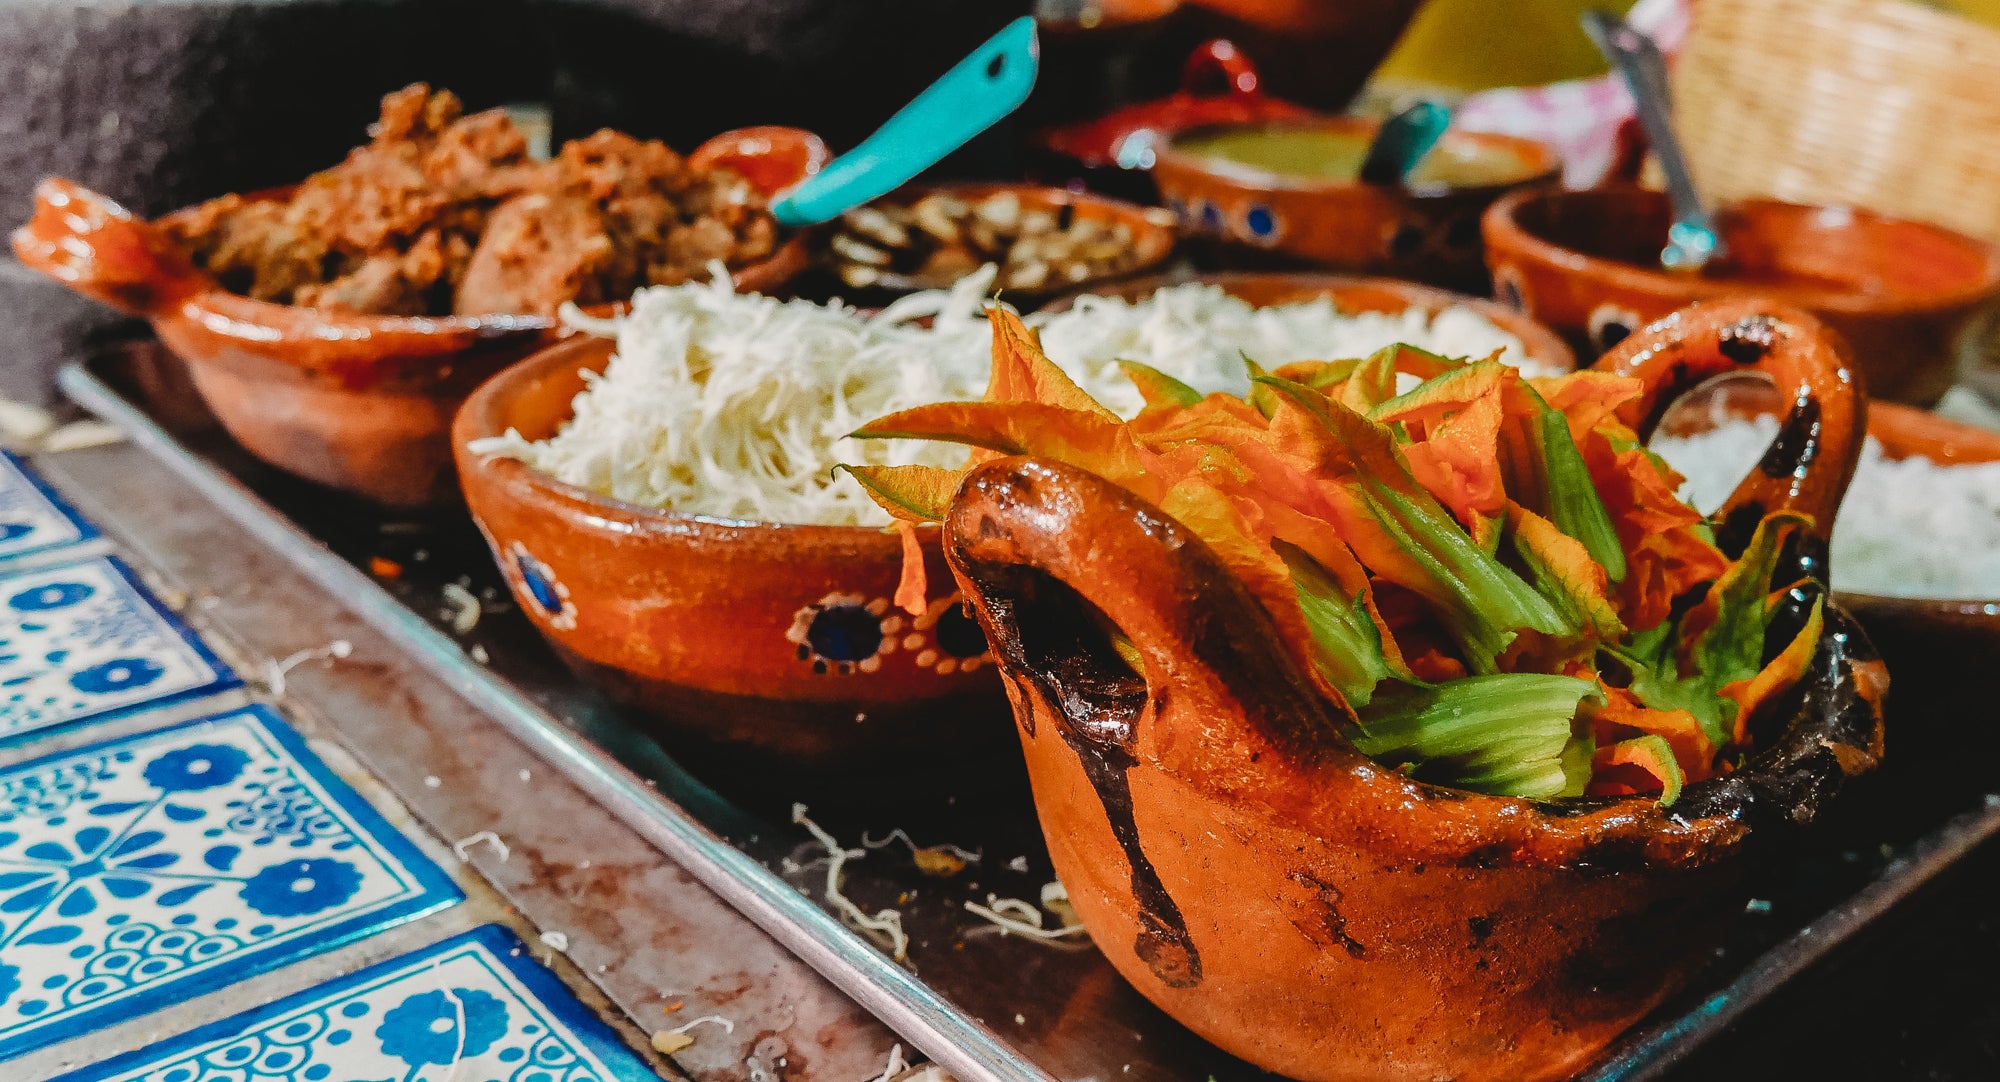 Isleande taste: Savouring the Mayan cuisine of Rosalia Chay